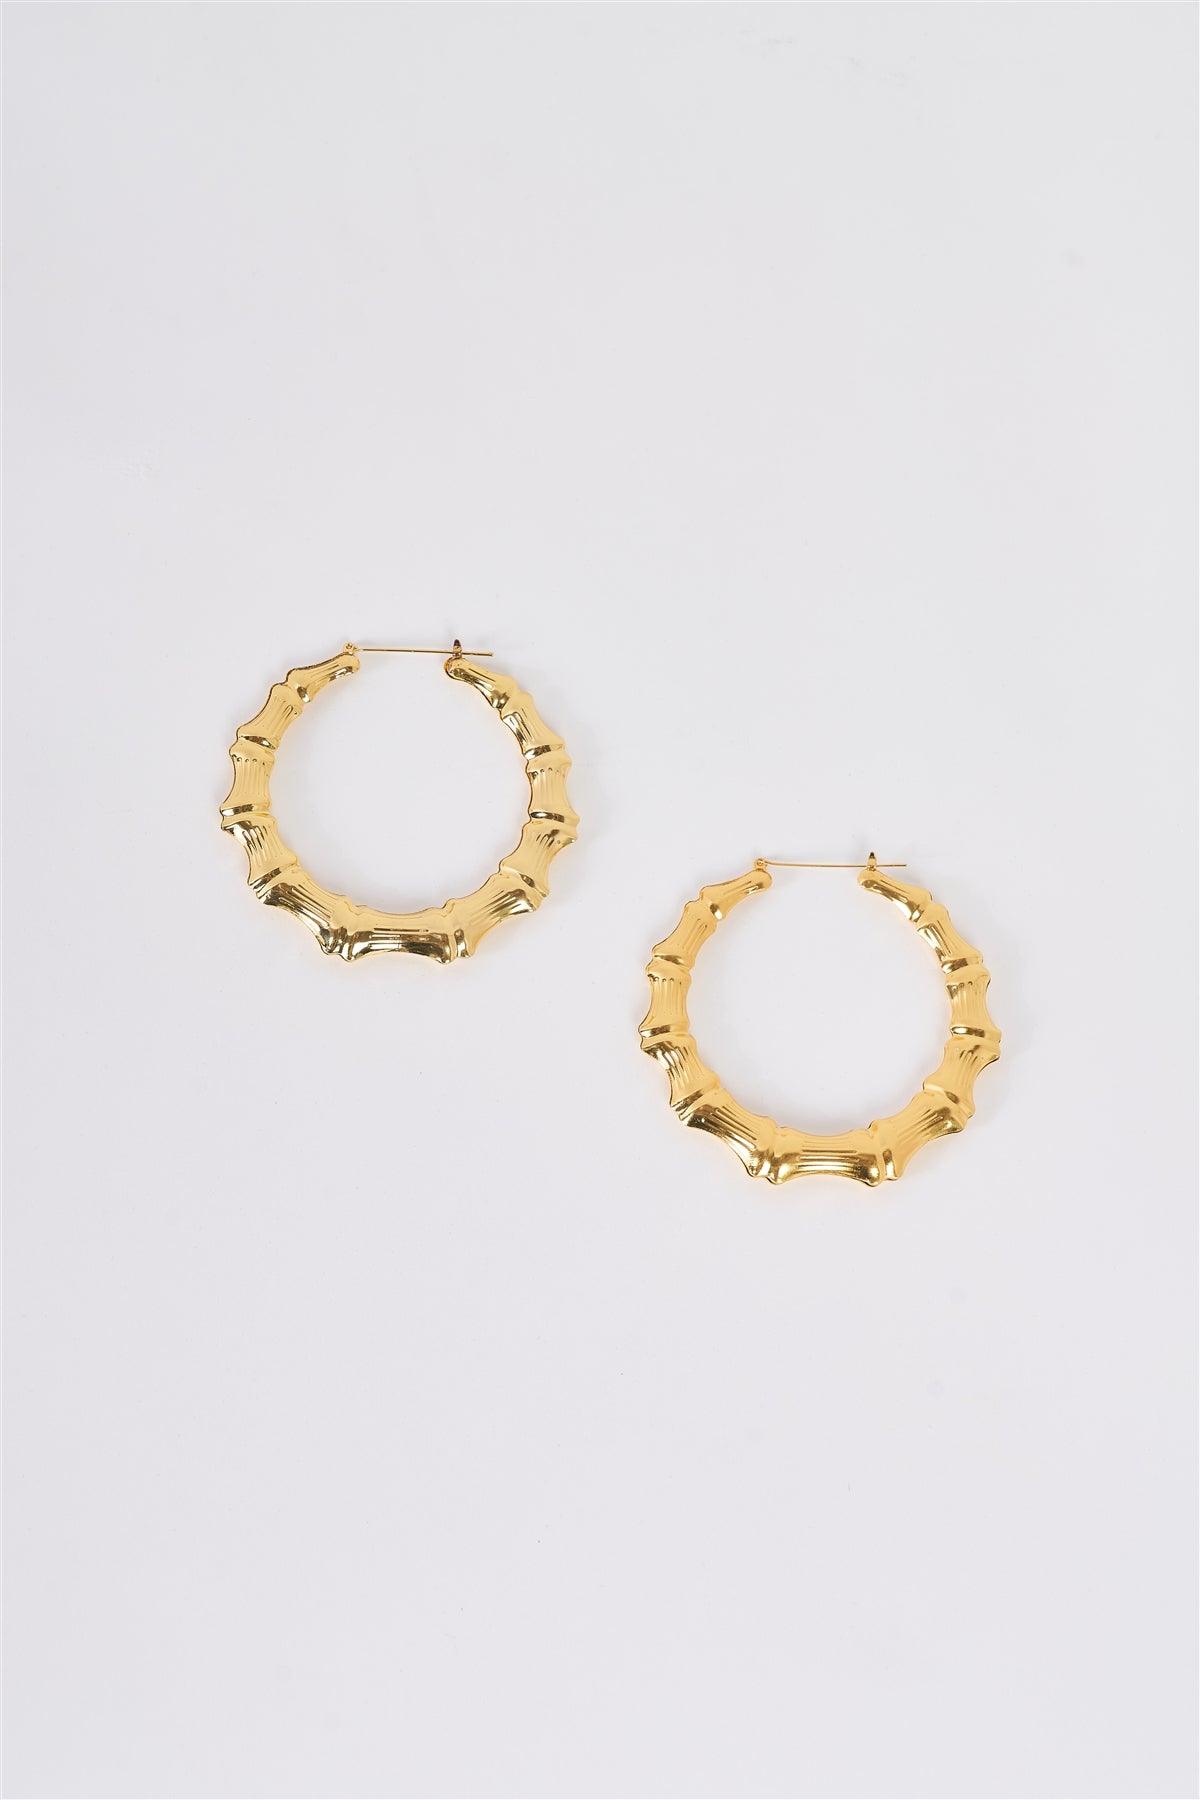 Gold Large Circle Bamboo Hoop Earrings / 3 Pairs